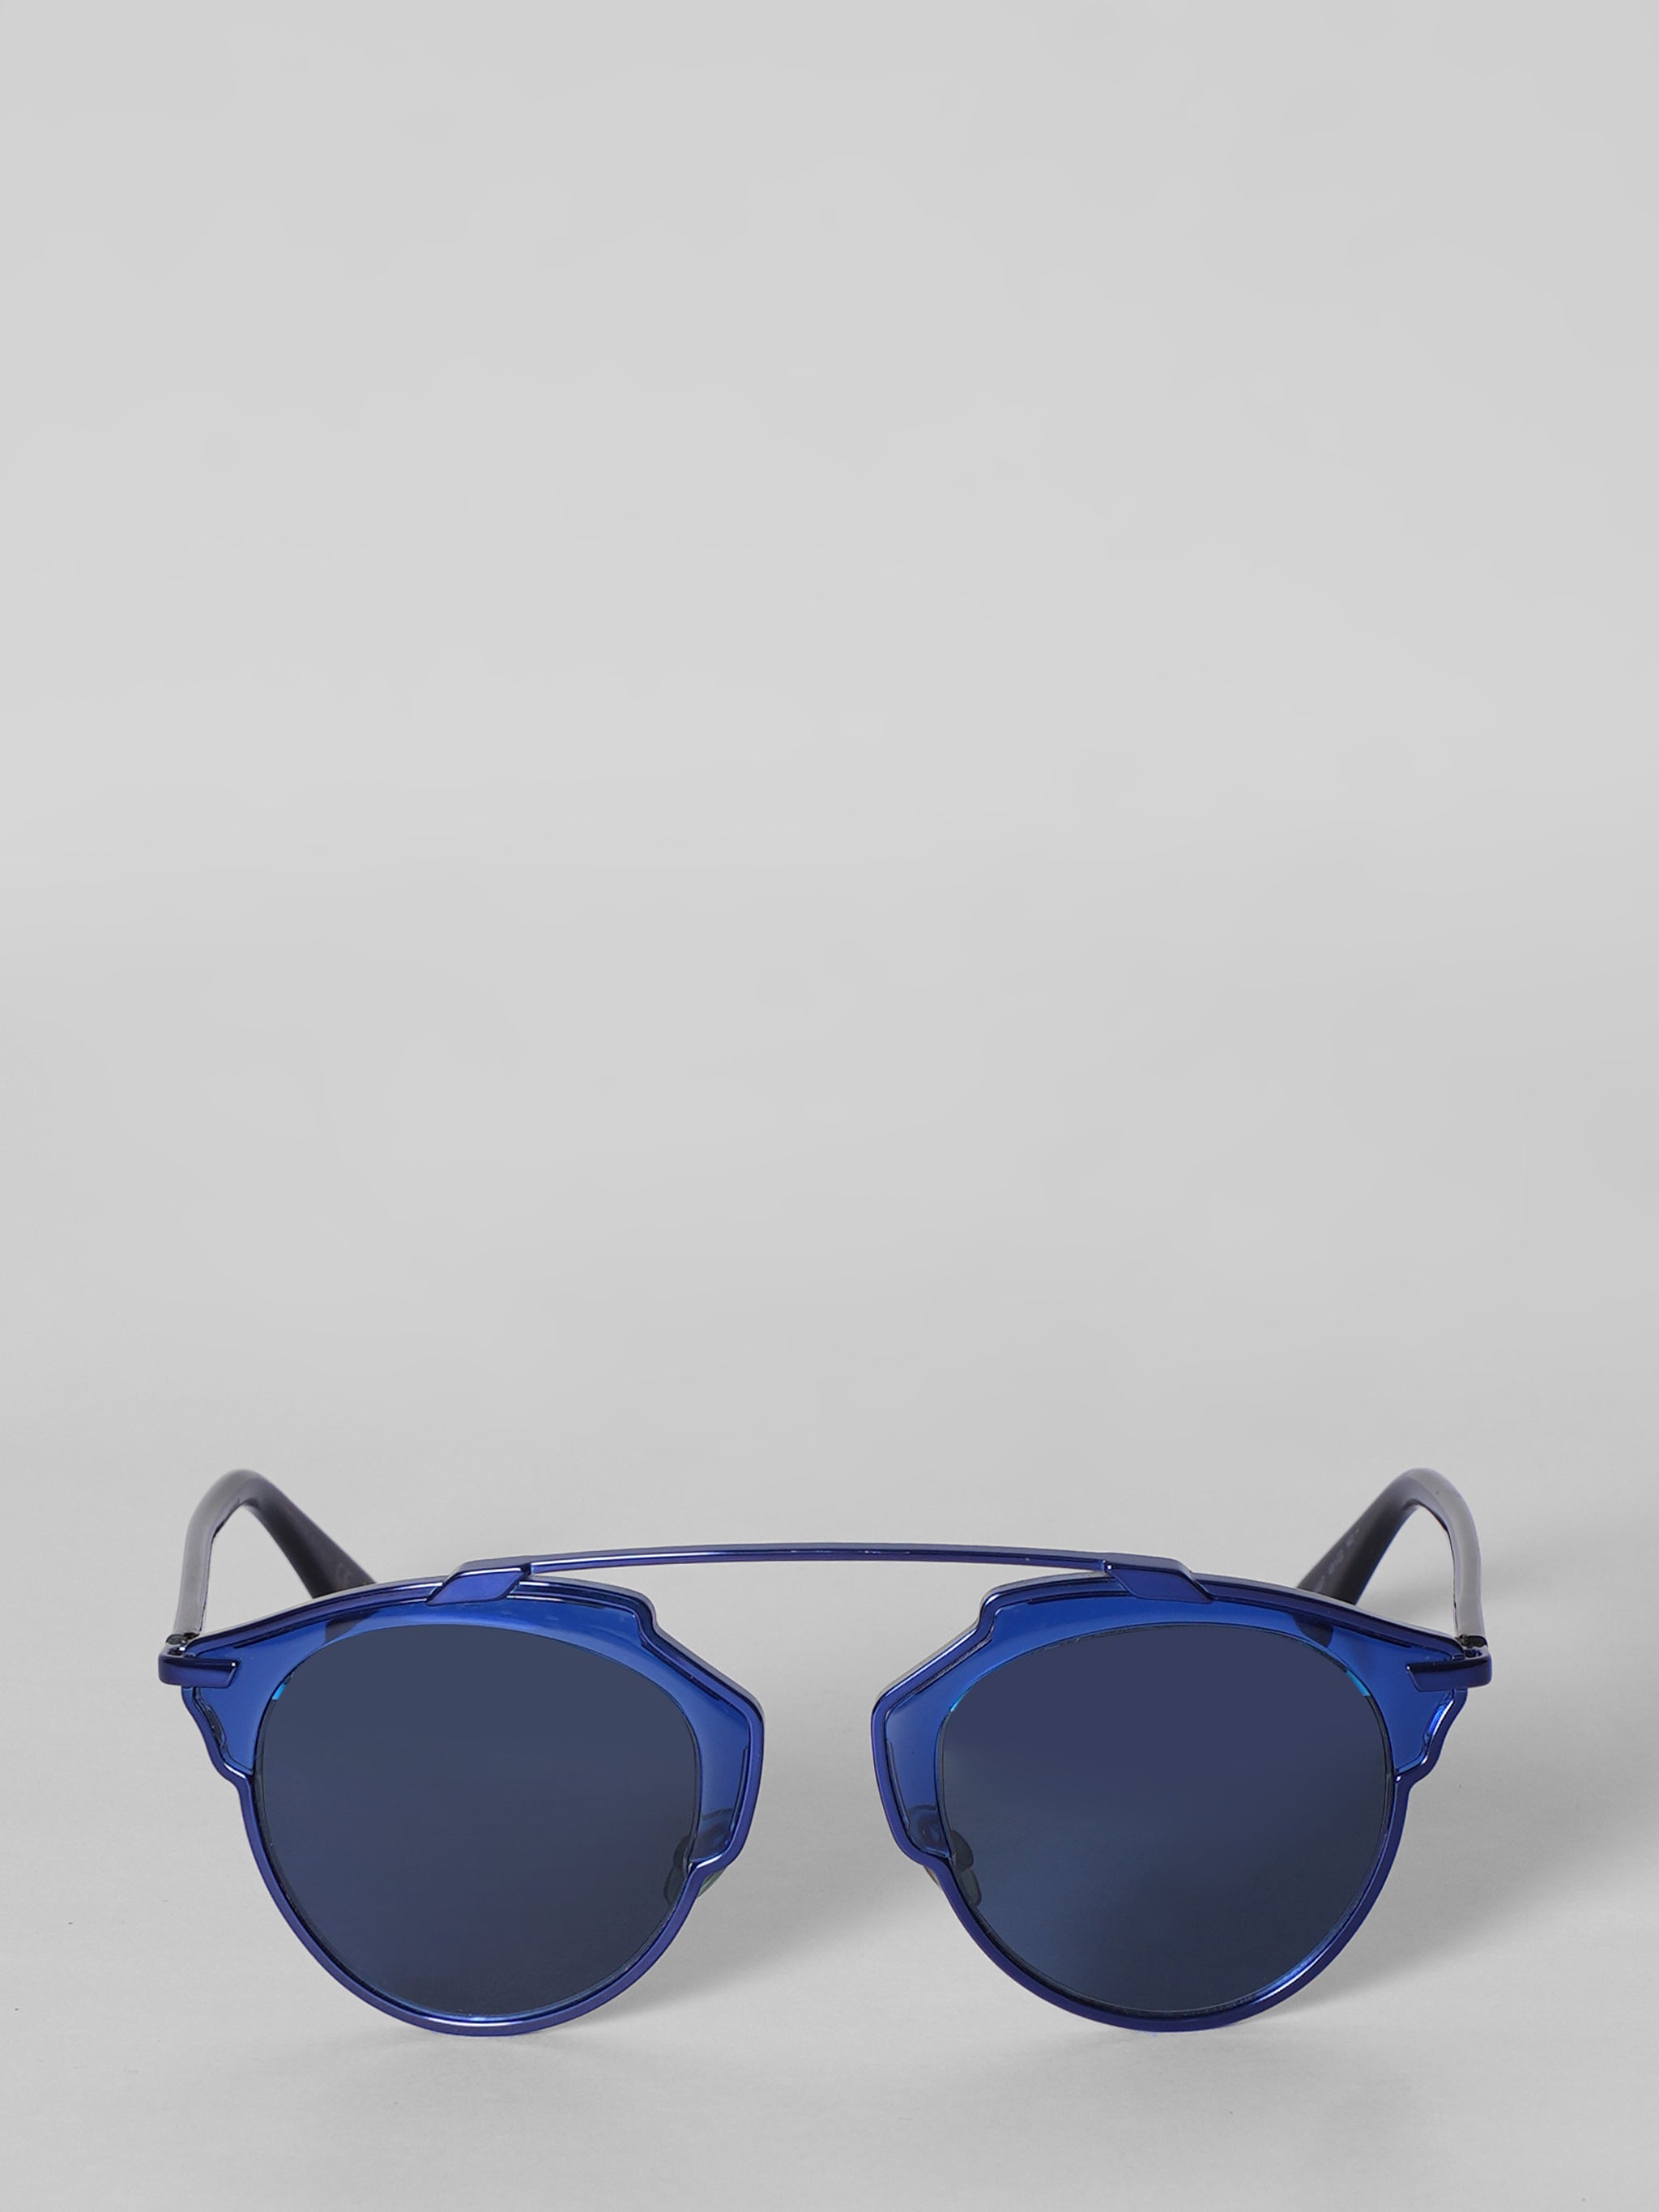 Dior So real Sunglasses